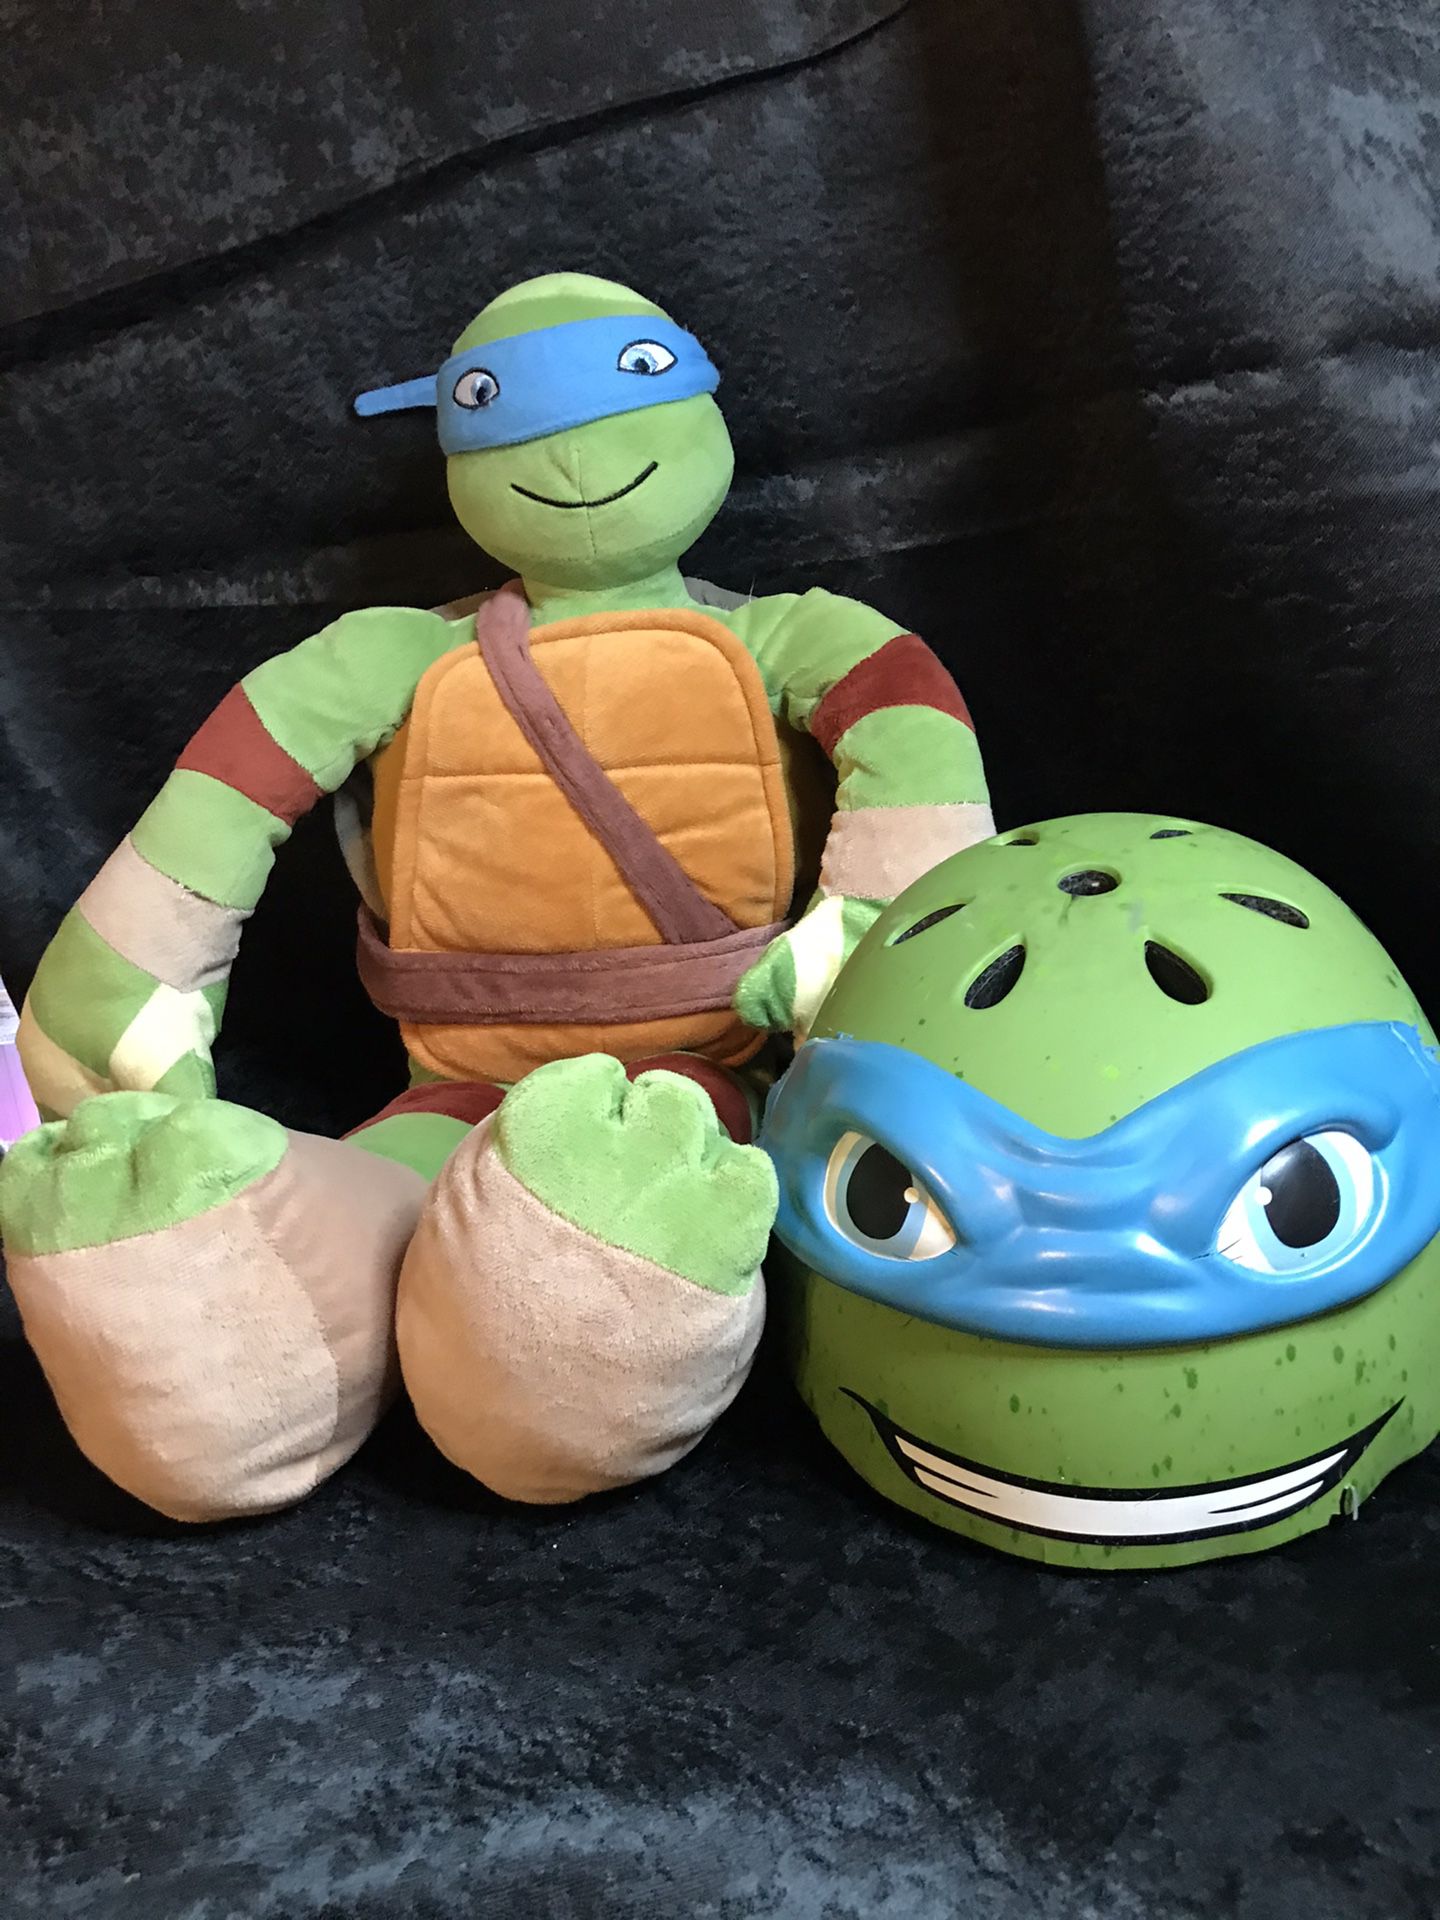 Teenage mutant ninja turtles 25 inch stuffed plush doll with bicycle helmet!